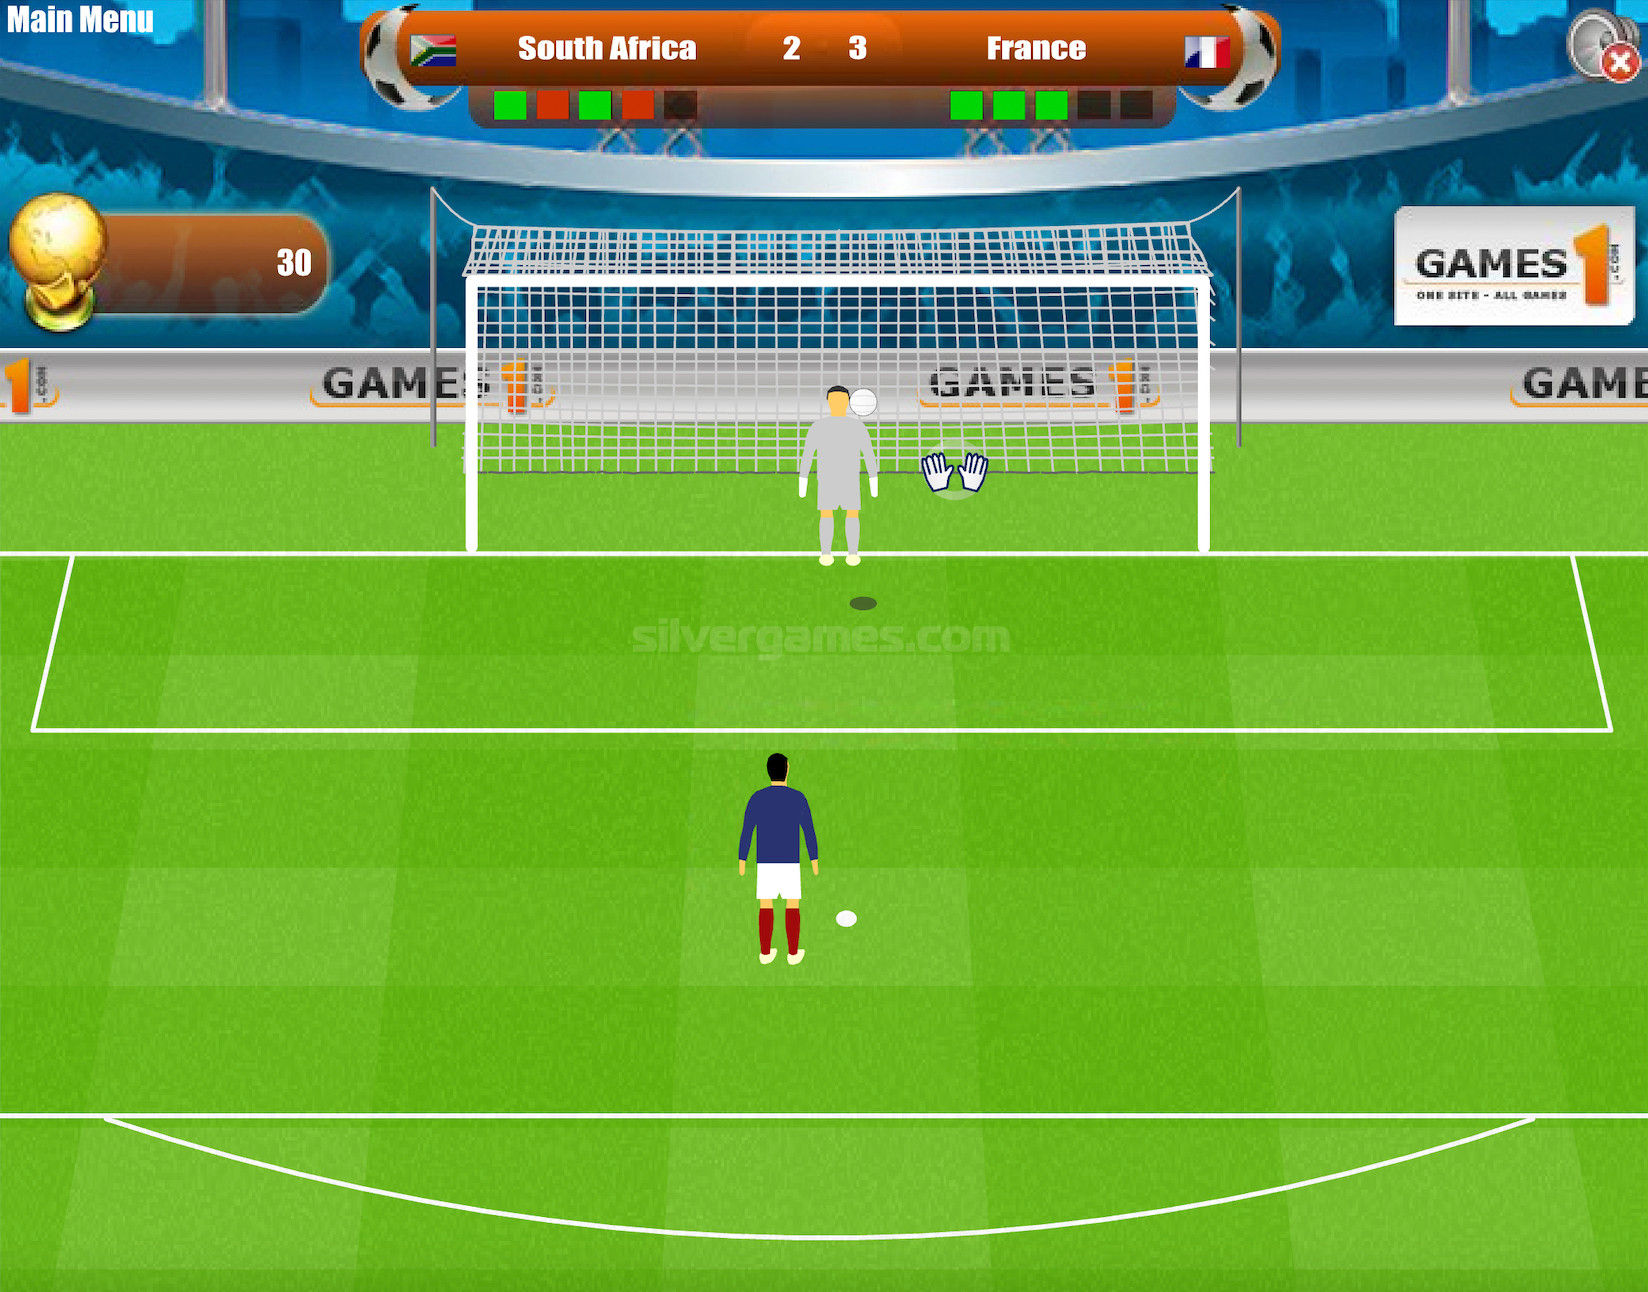 Penalty Shootout: Multi League - Play Online on SilverGames 🕹️